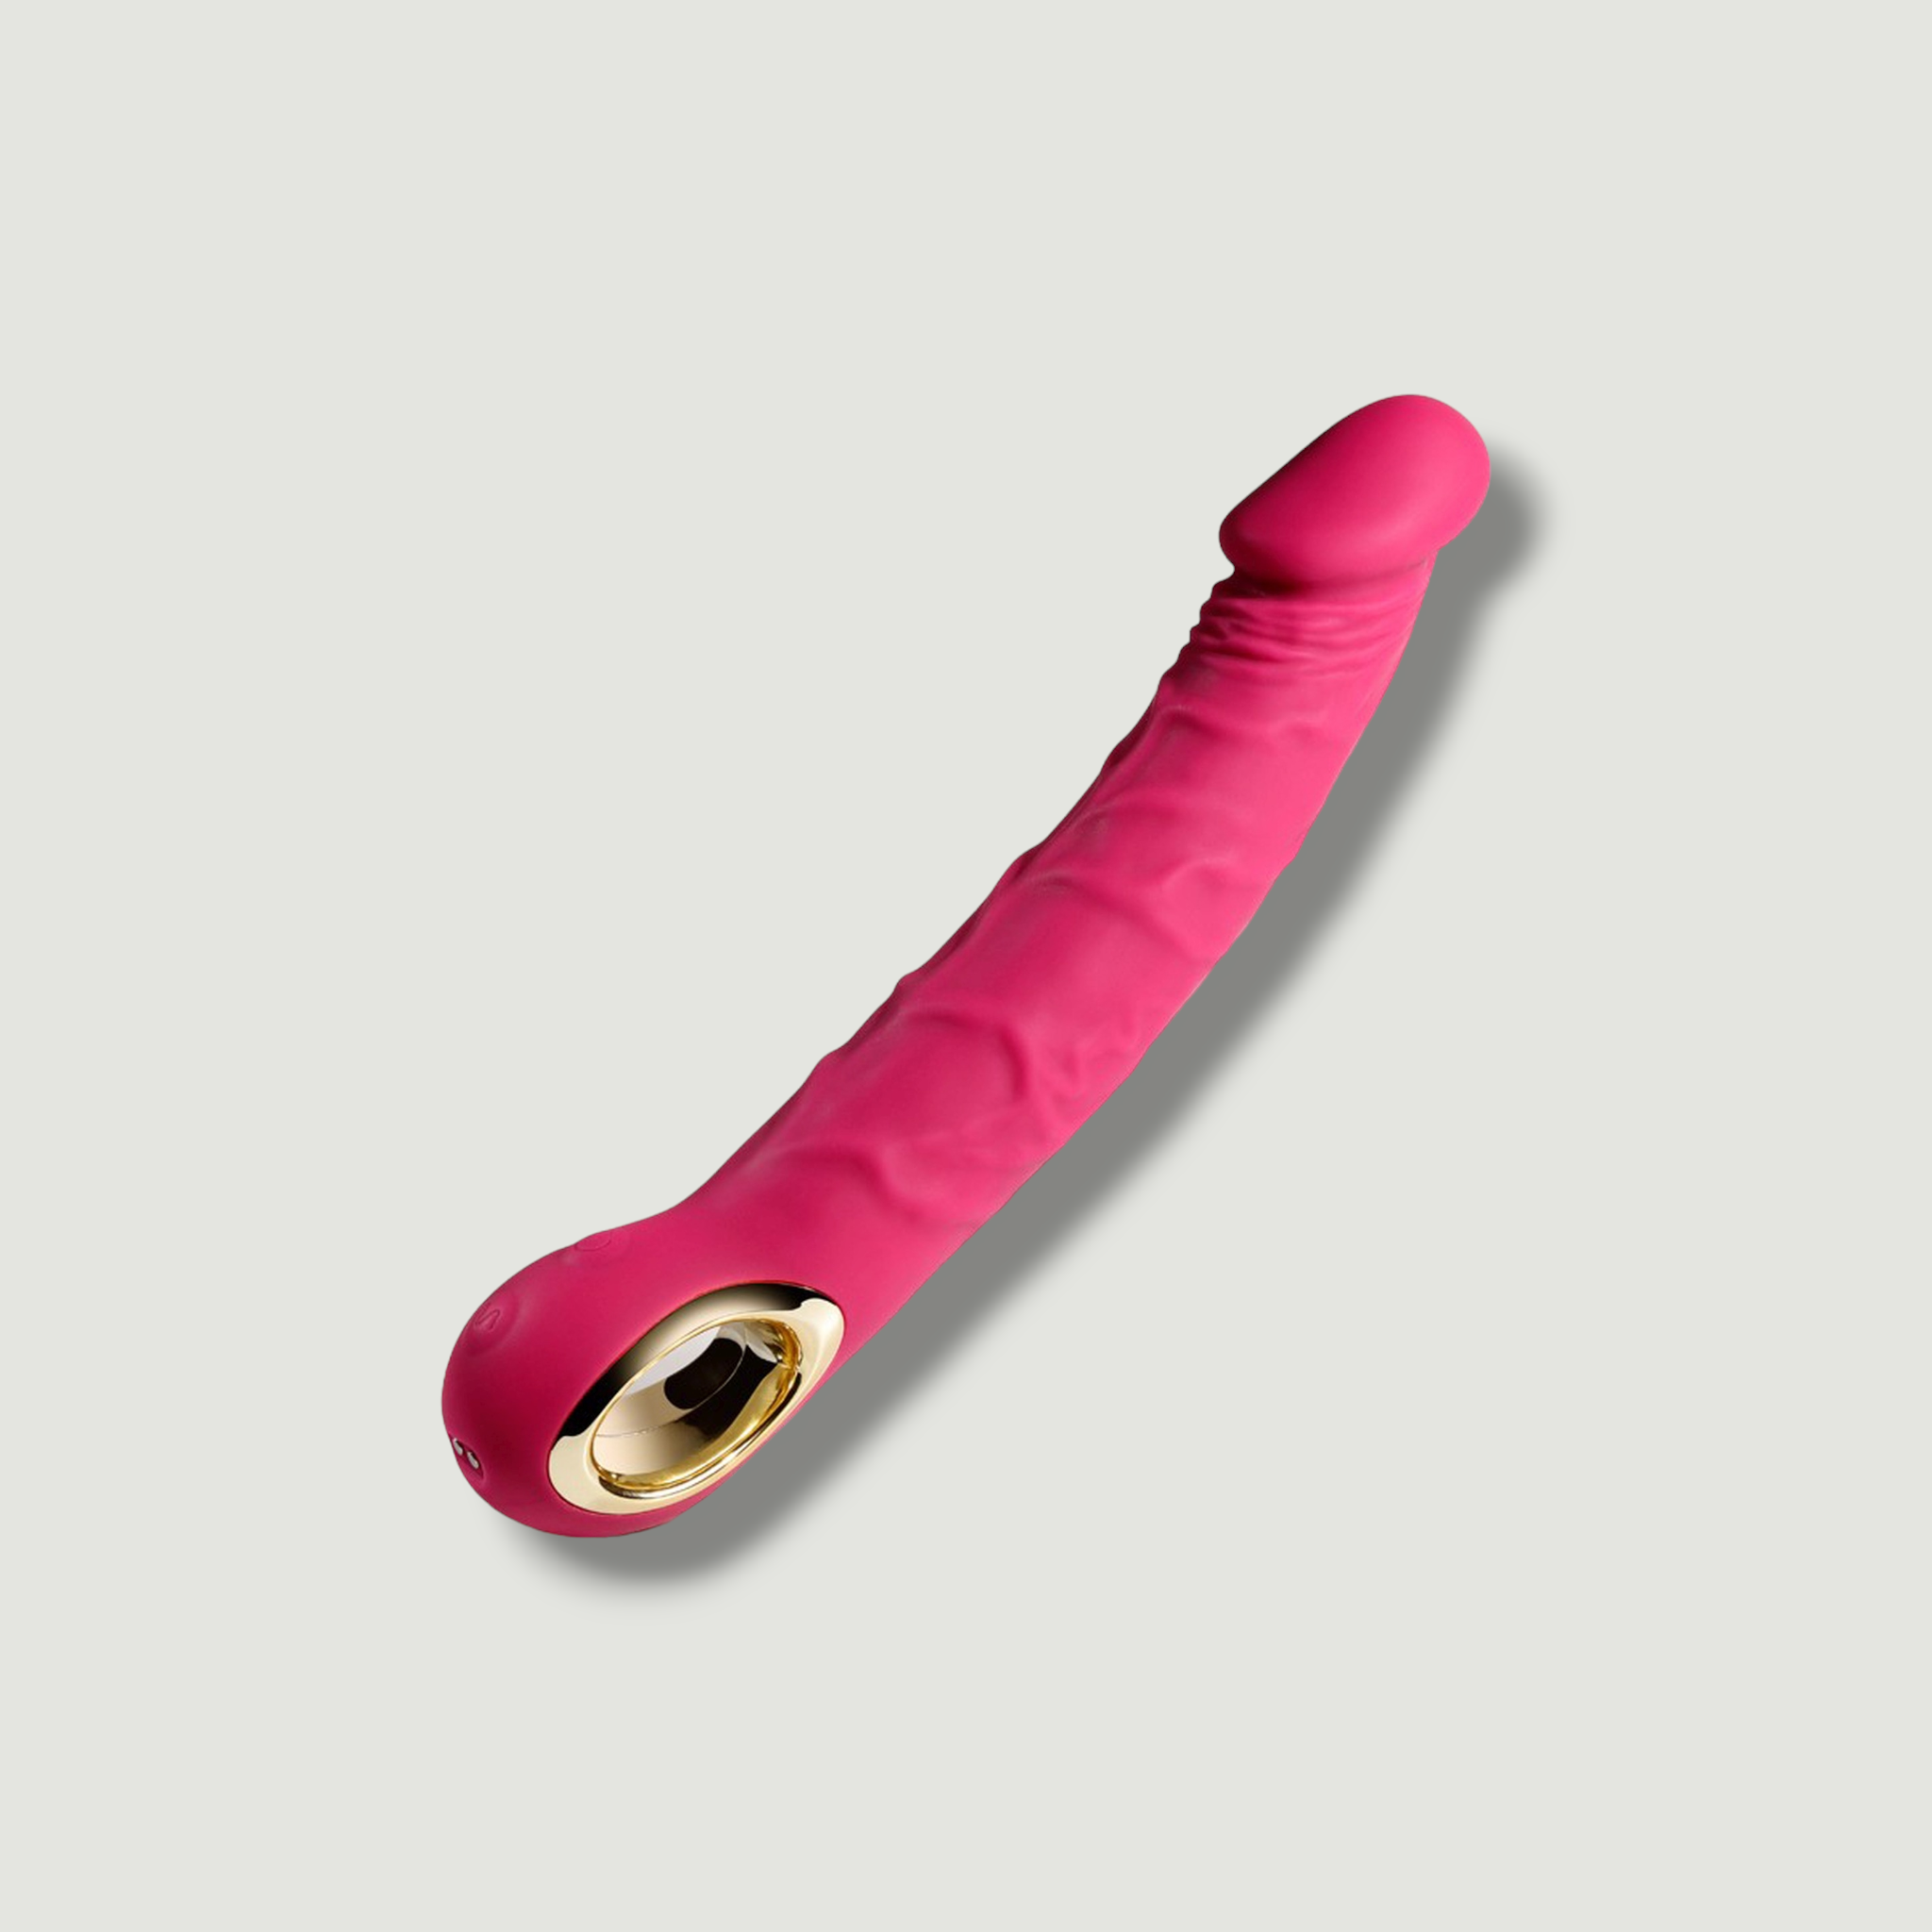 Pink Realistic Vibrator